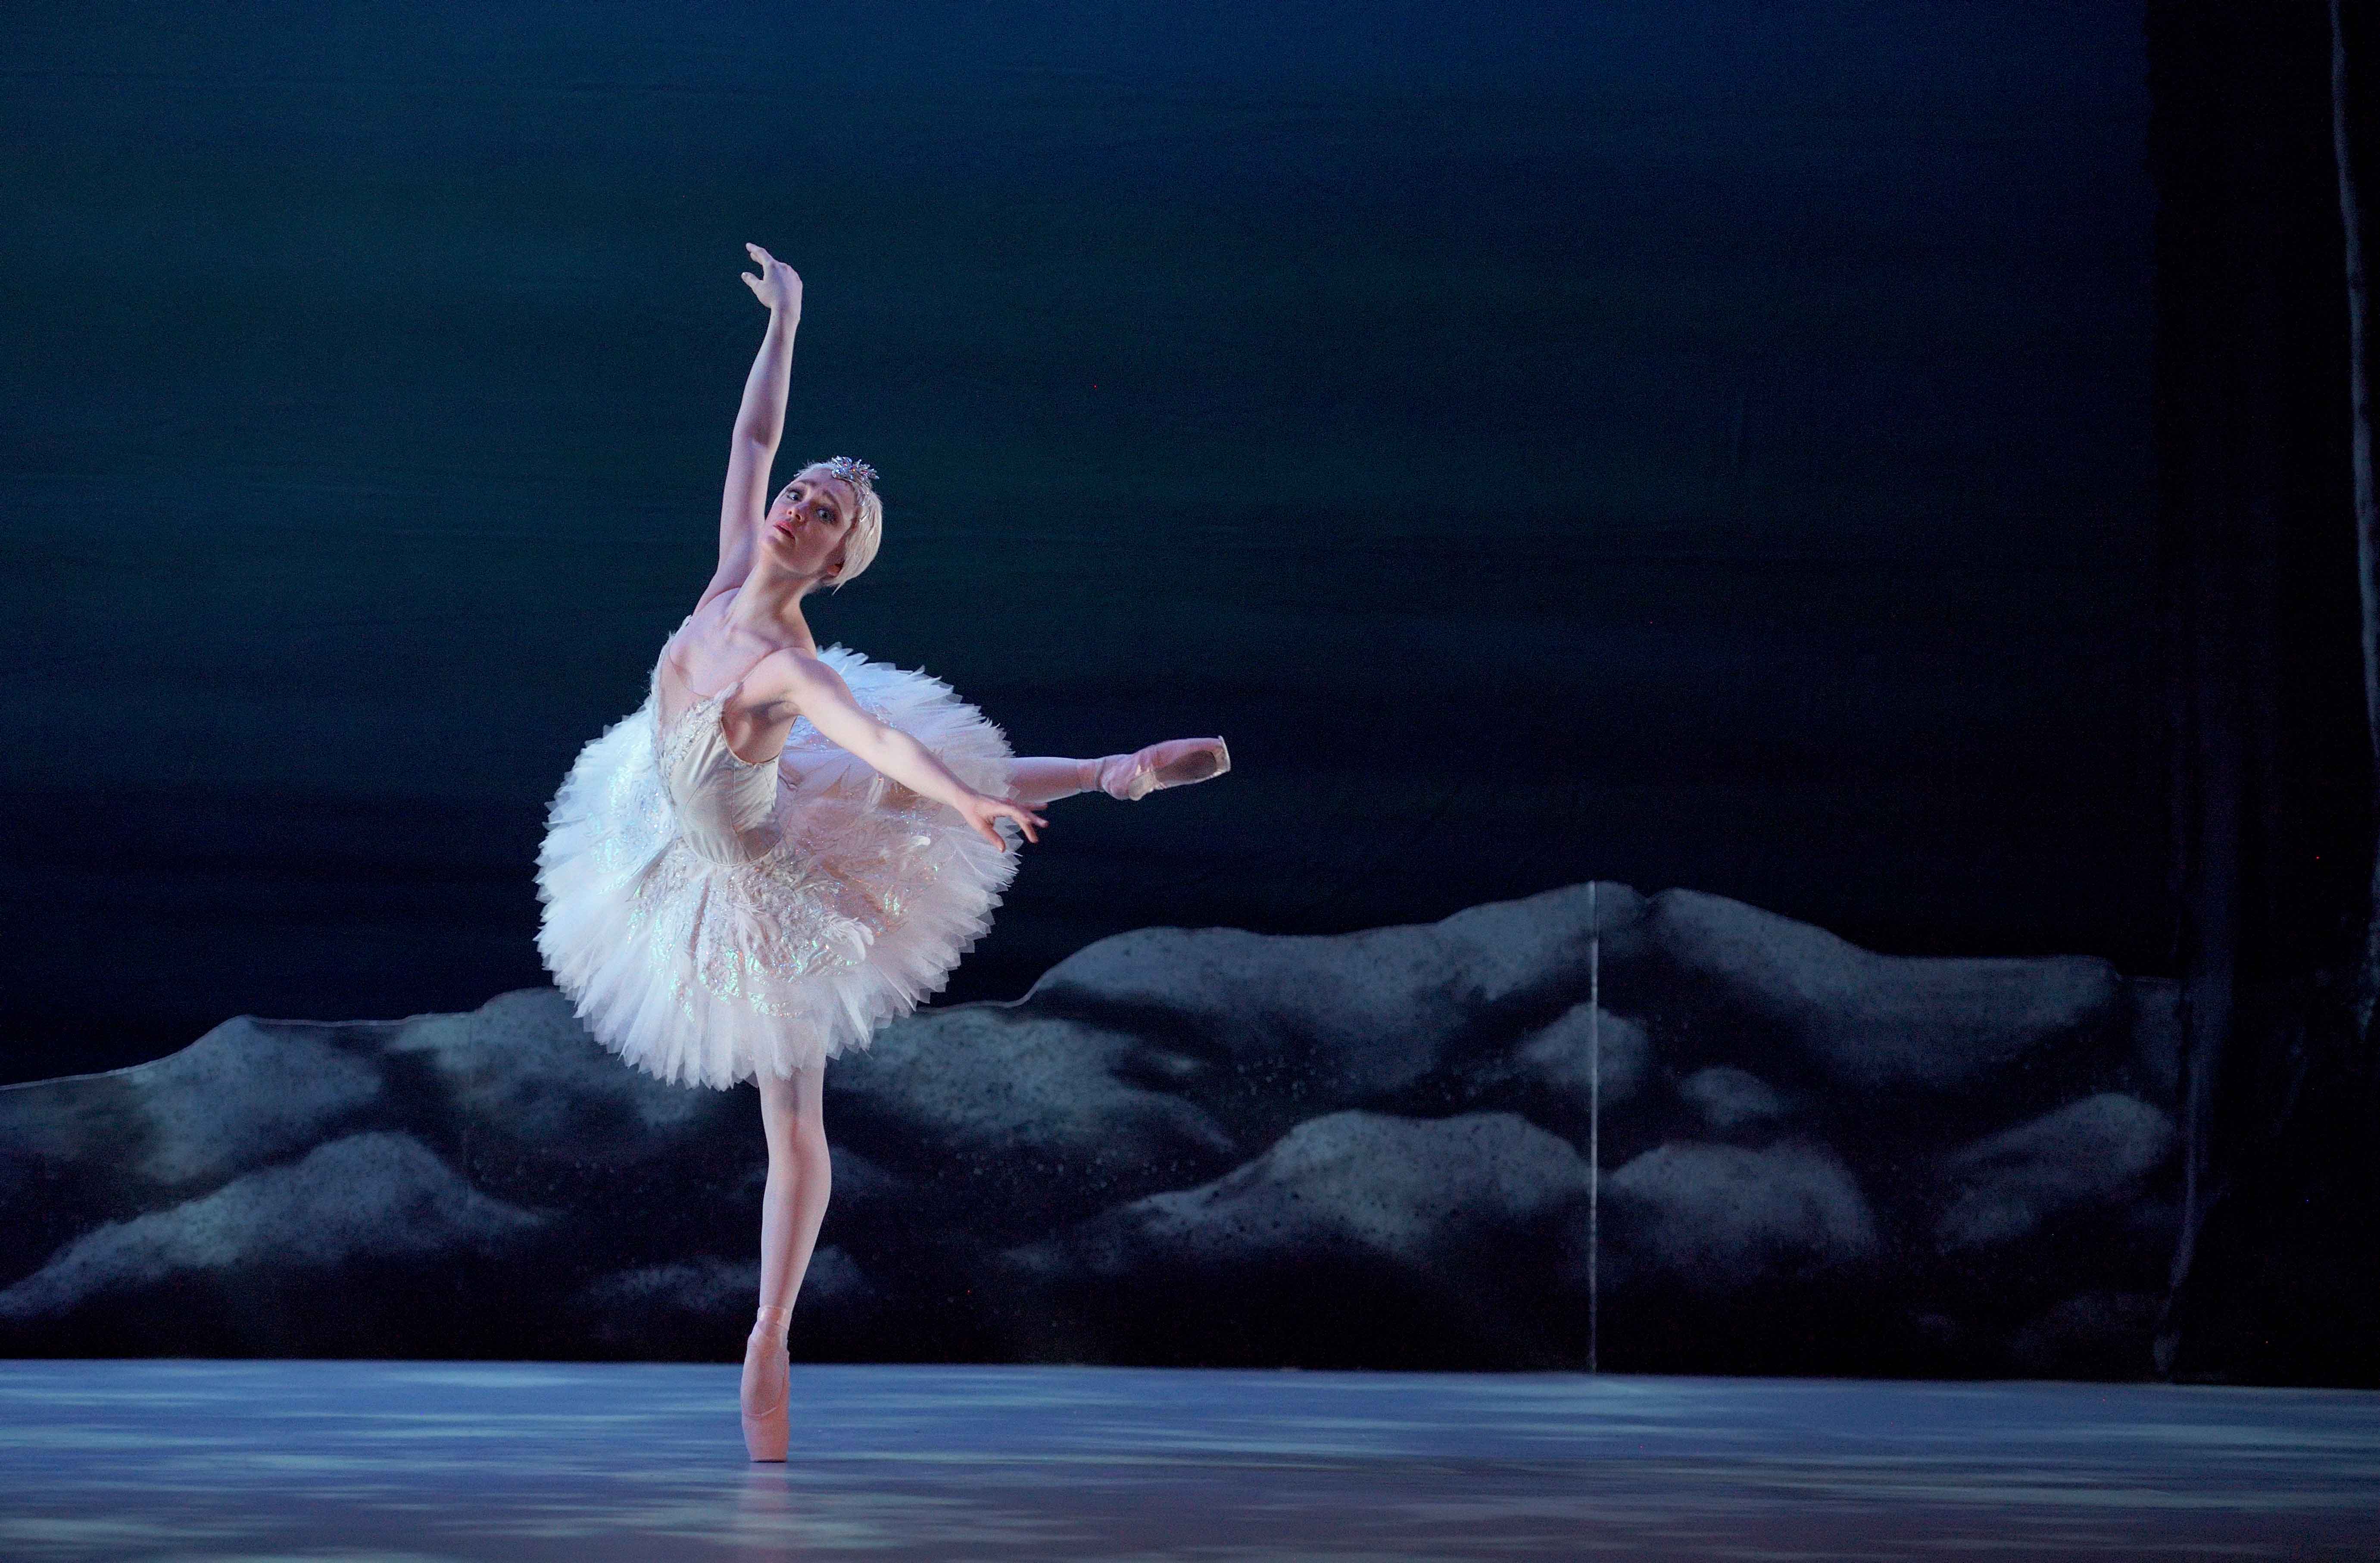 Chloe-Keneally-as-Odette-in-My-First-Ballet-Swan-Lake-©-Laurent.